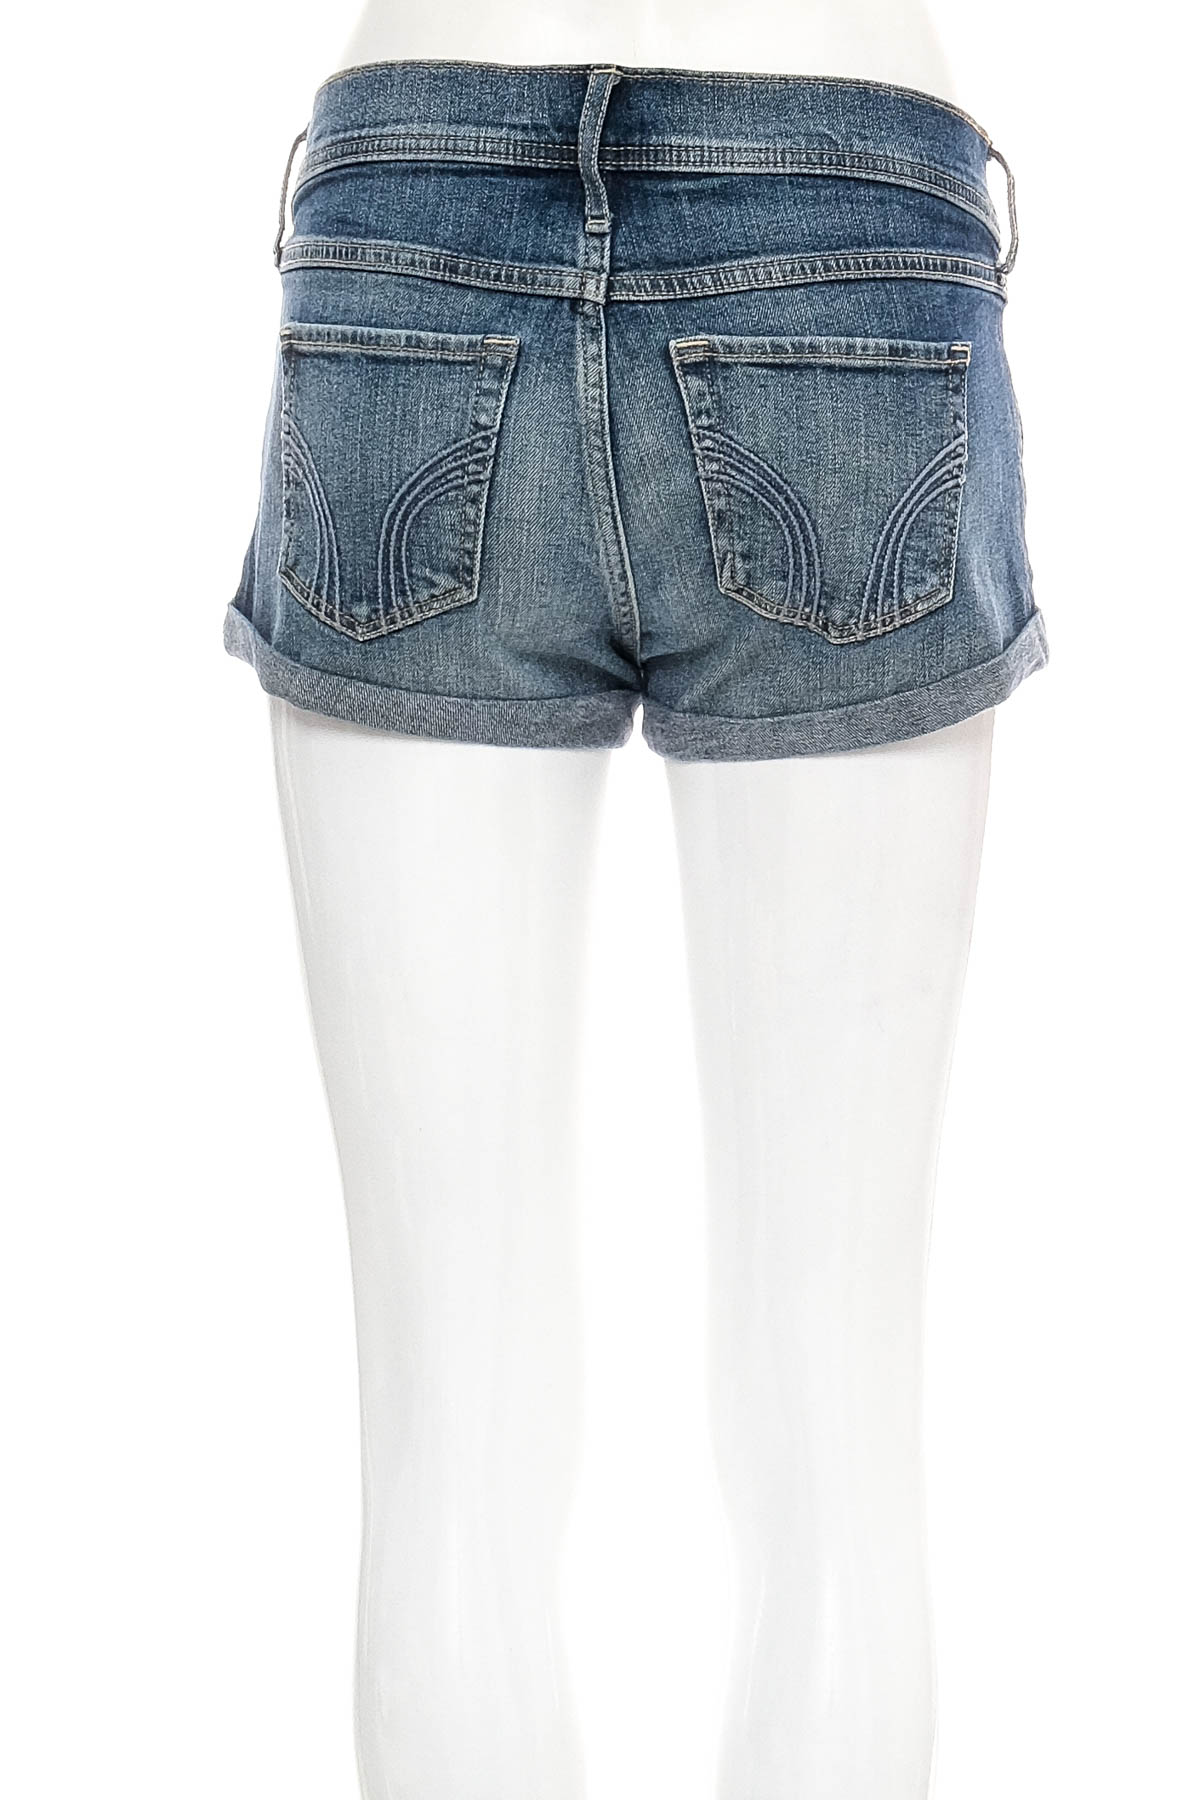 Female shorts - Hollister - 1